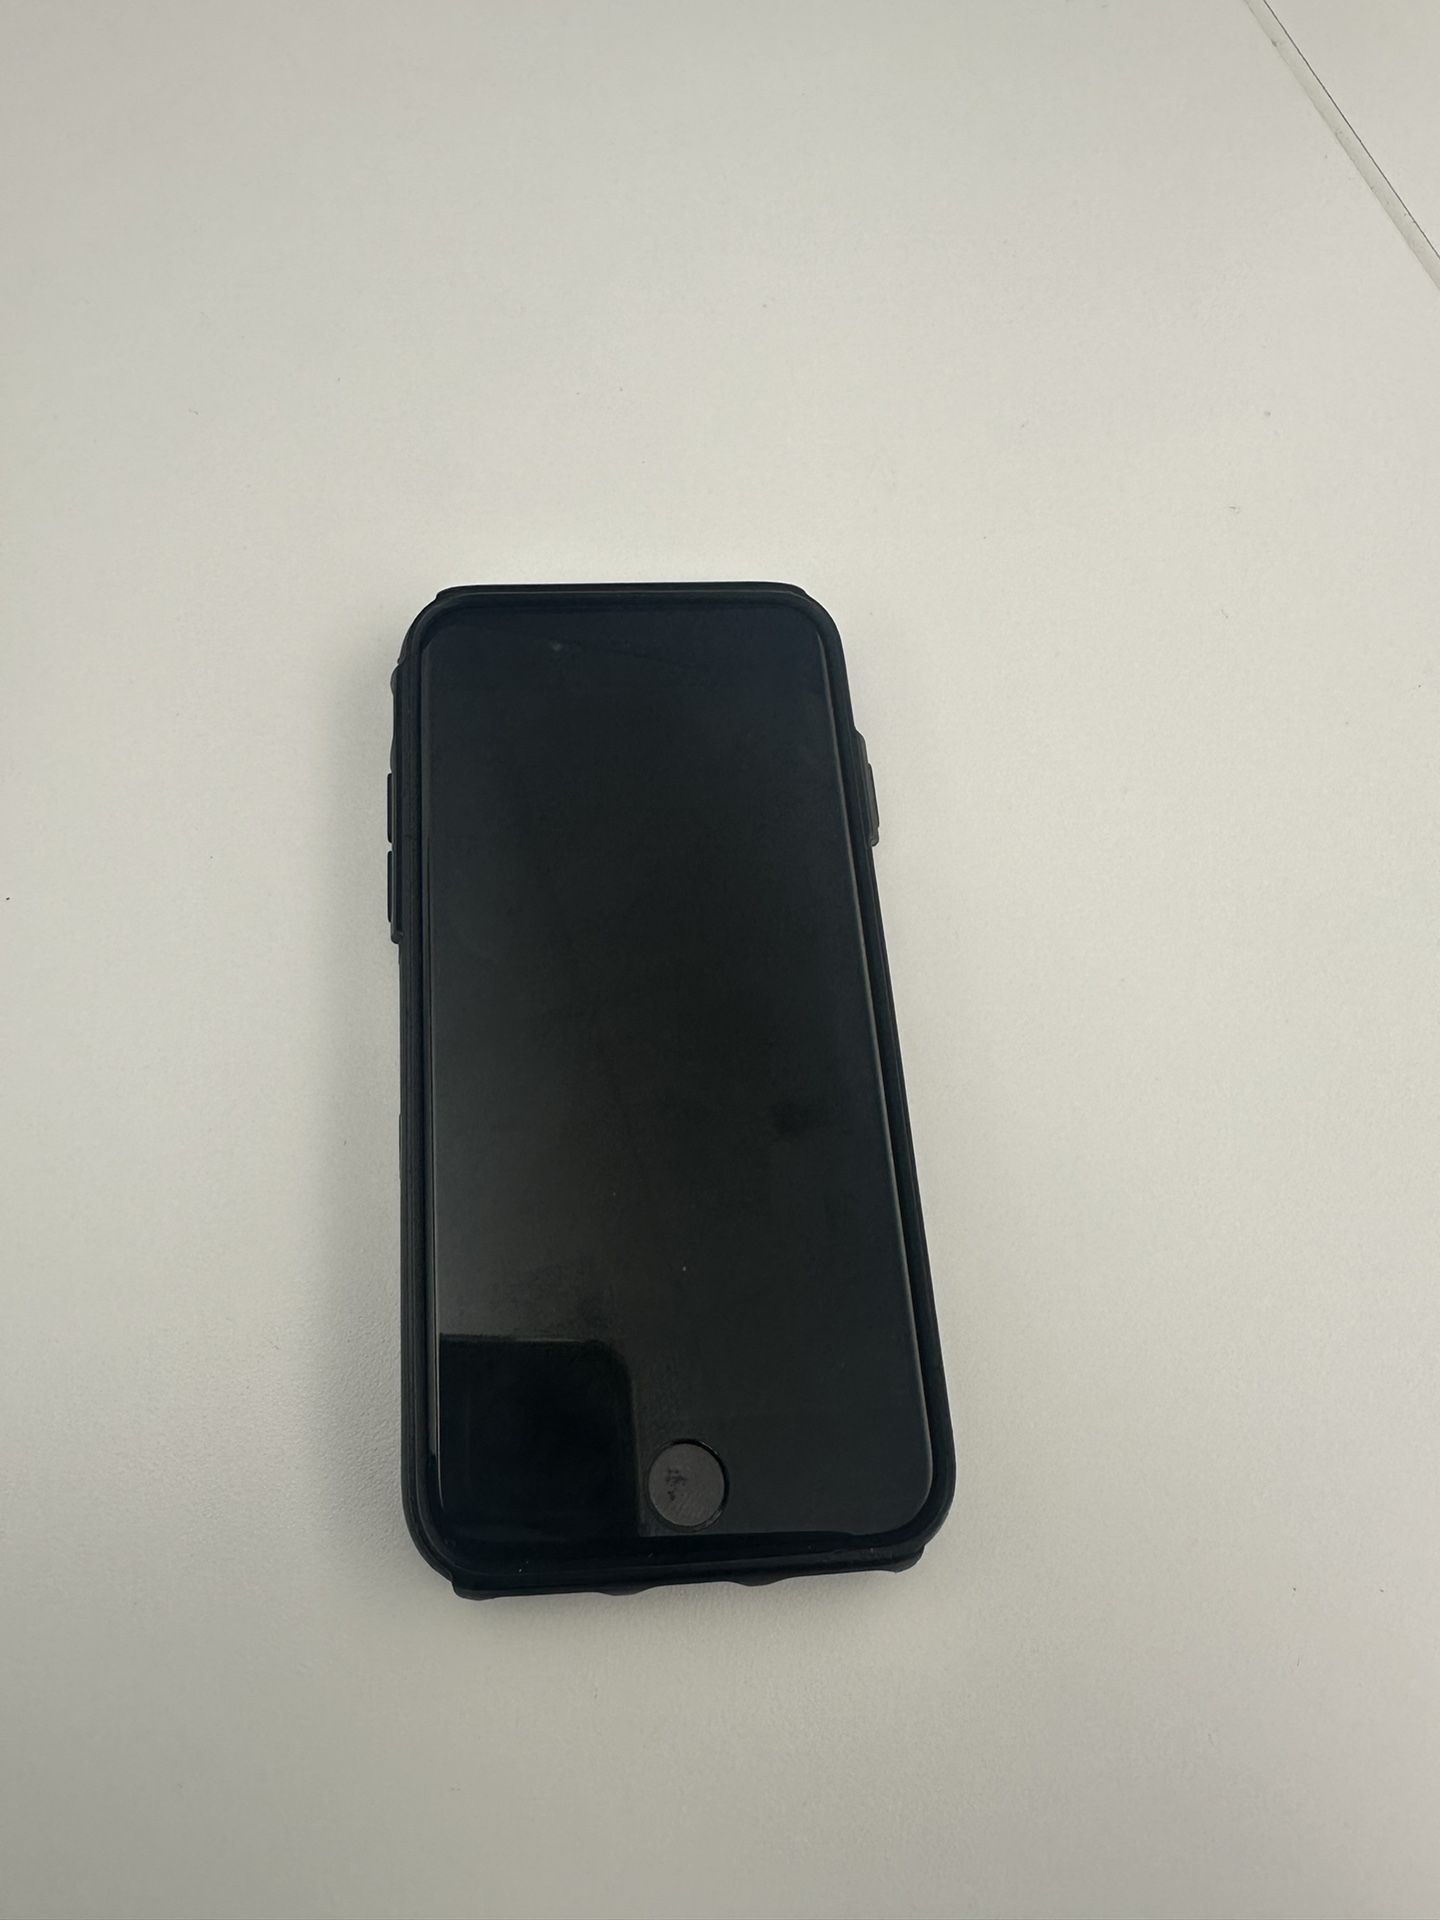 iPhone 8s Smoke Gray/Black 128G